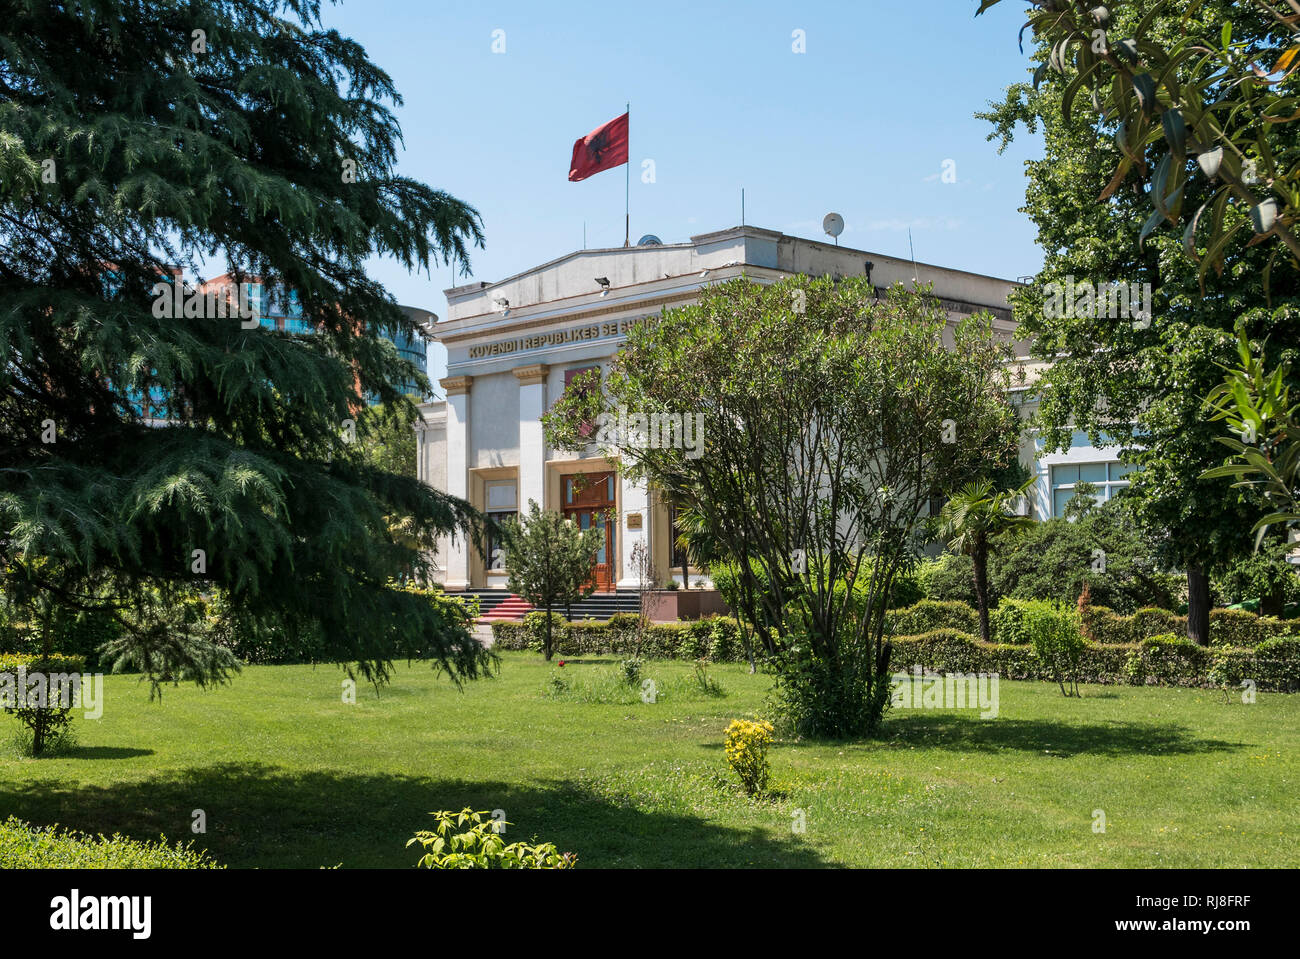 Albanien, Balkanhalbinsel, Südosteuropa, Republik Albanien, Tirana, Hauptstadt Albanisches Parlament Stockfoto